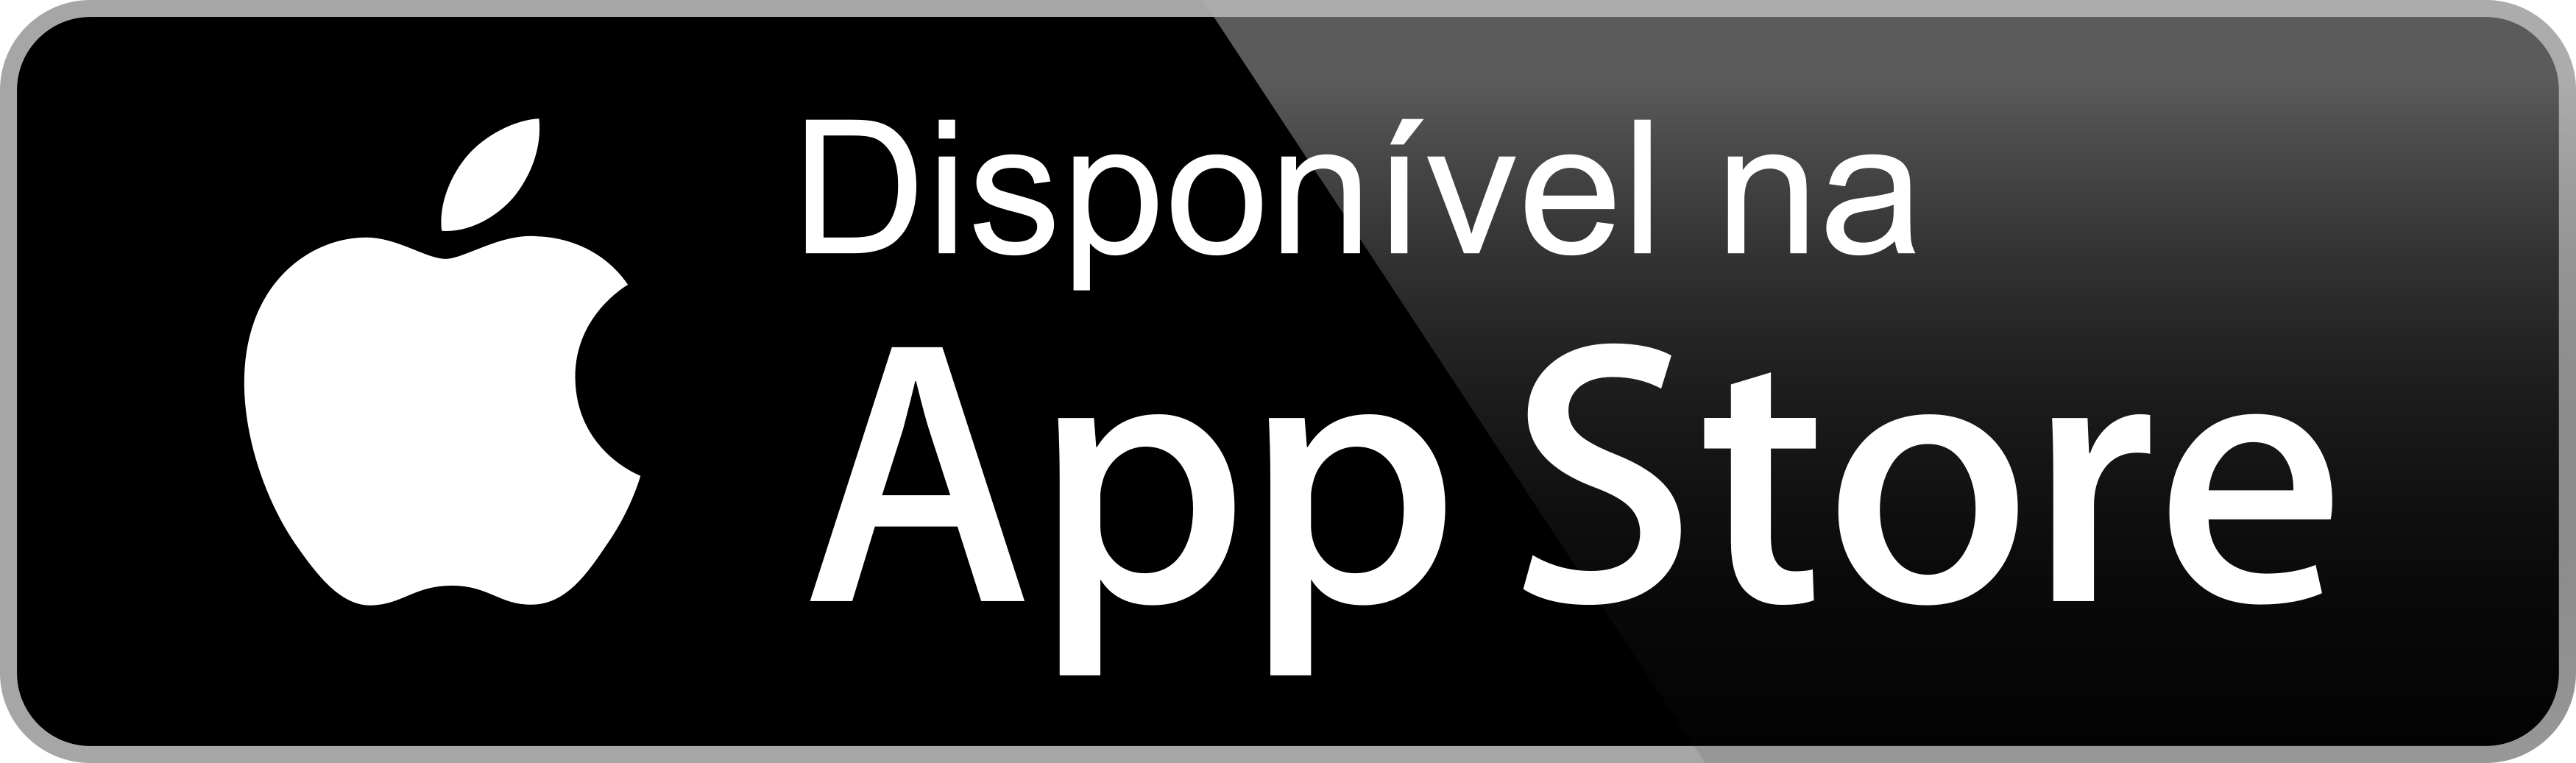 download através da app store